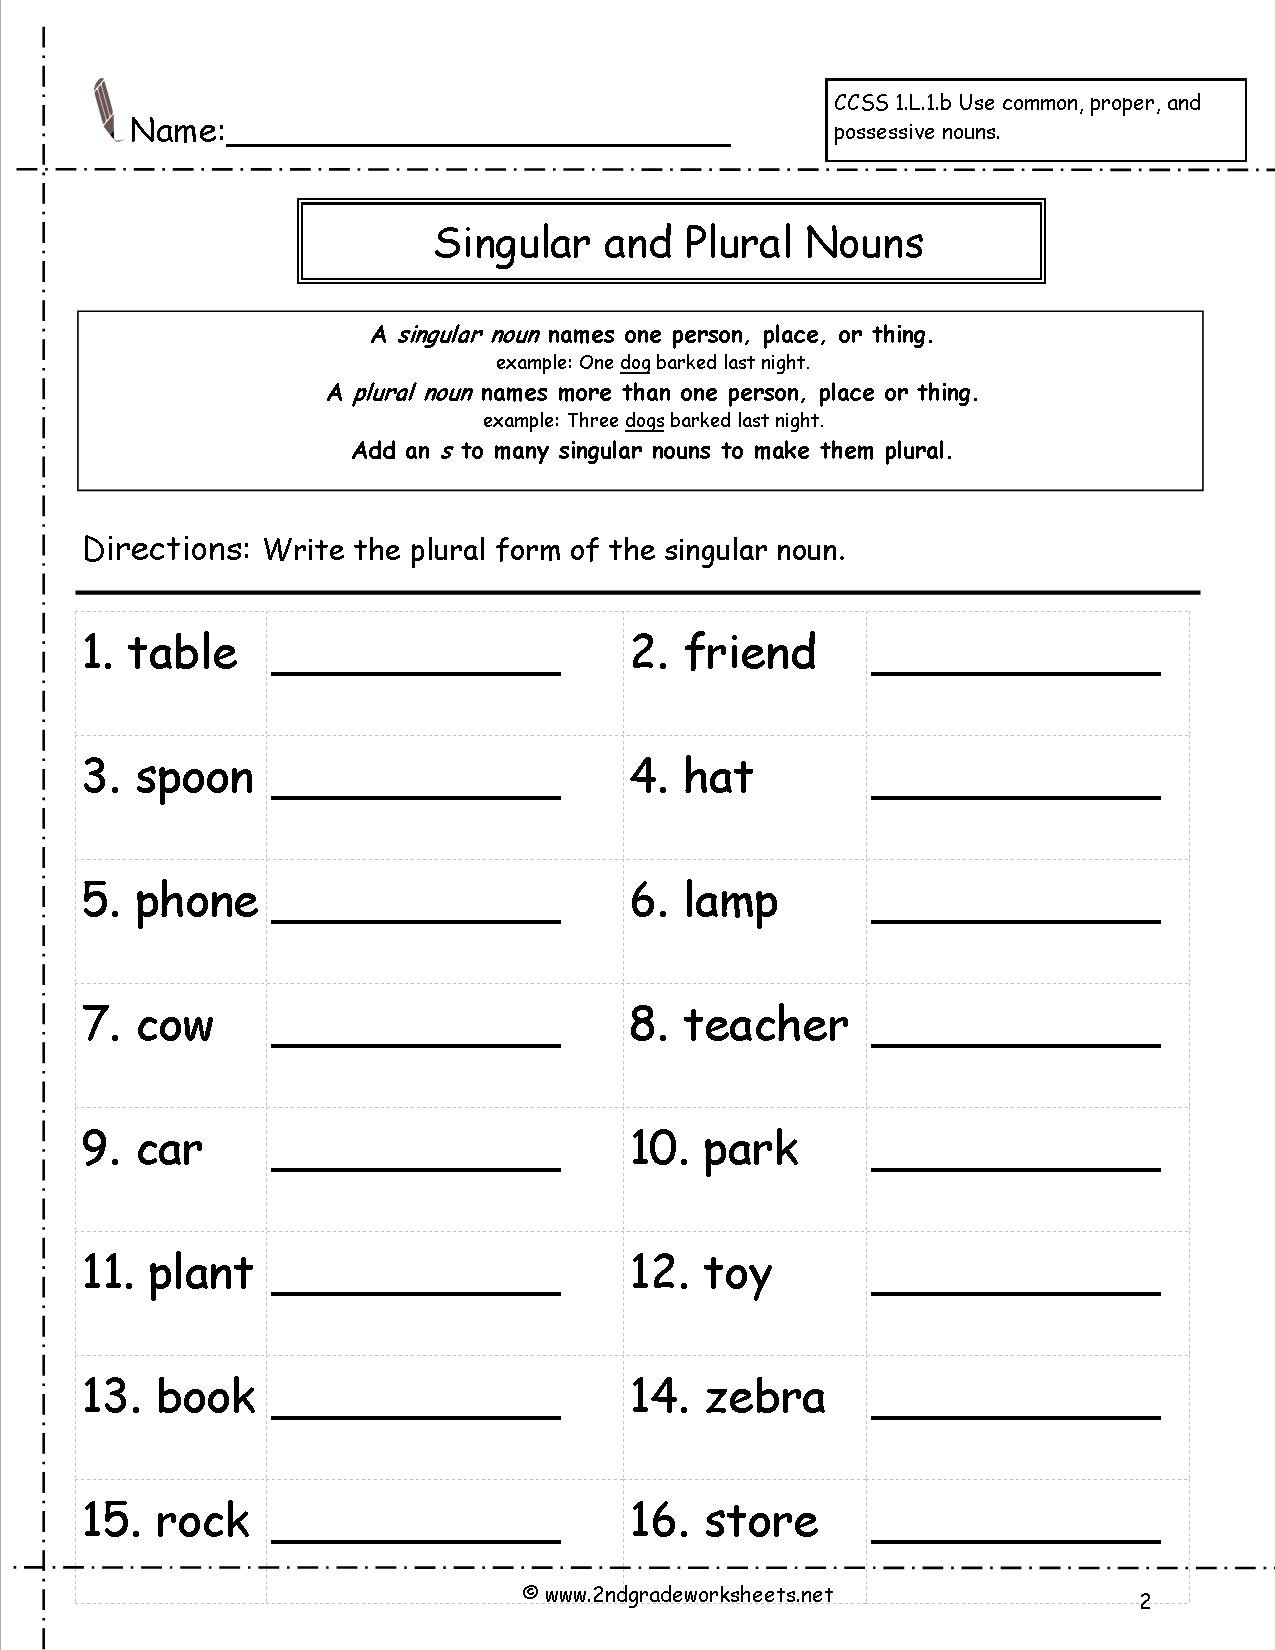 Plural Nouns Worksheet 5th Grade Singular and Plural Nouns Worksheets